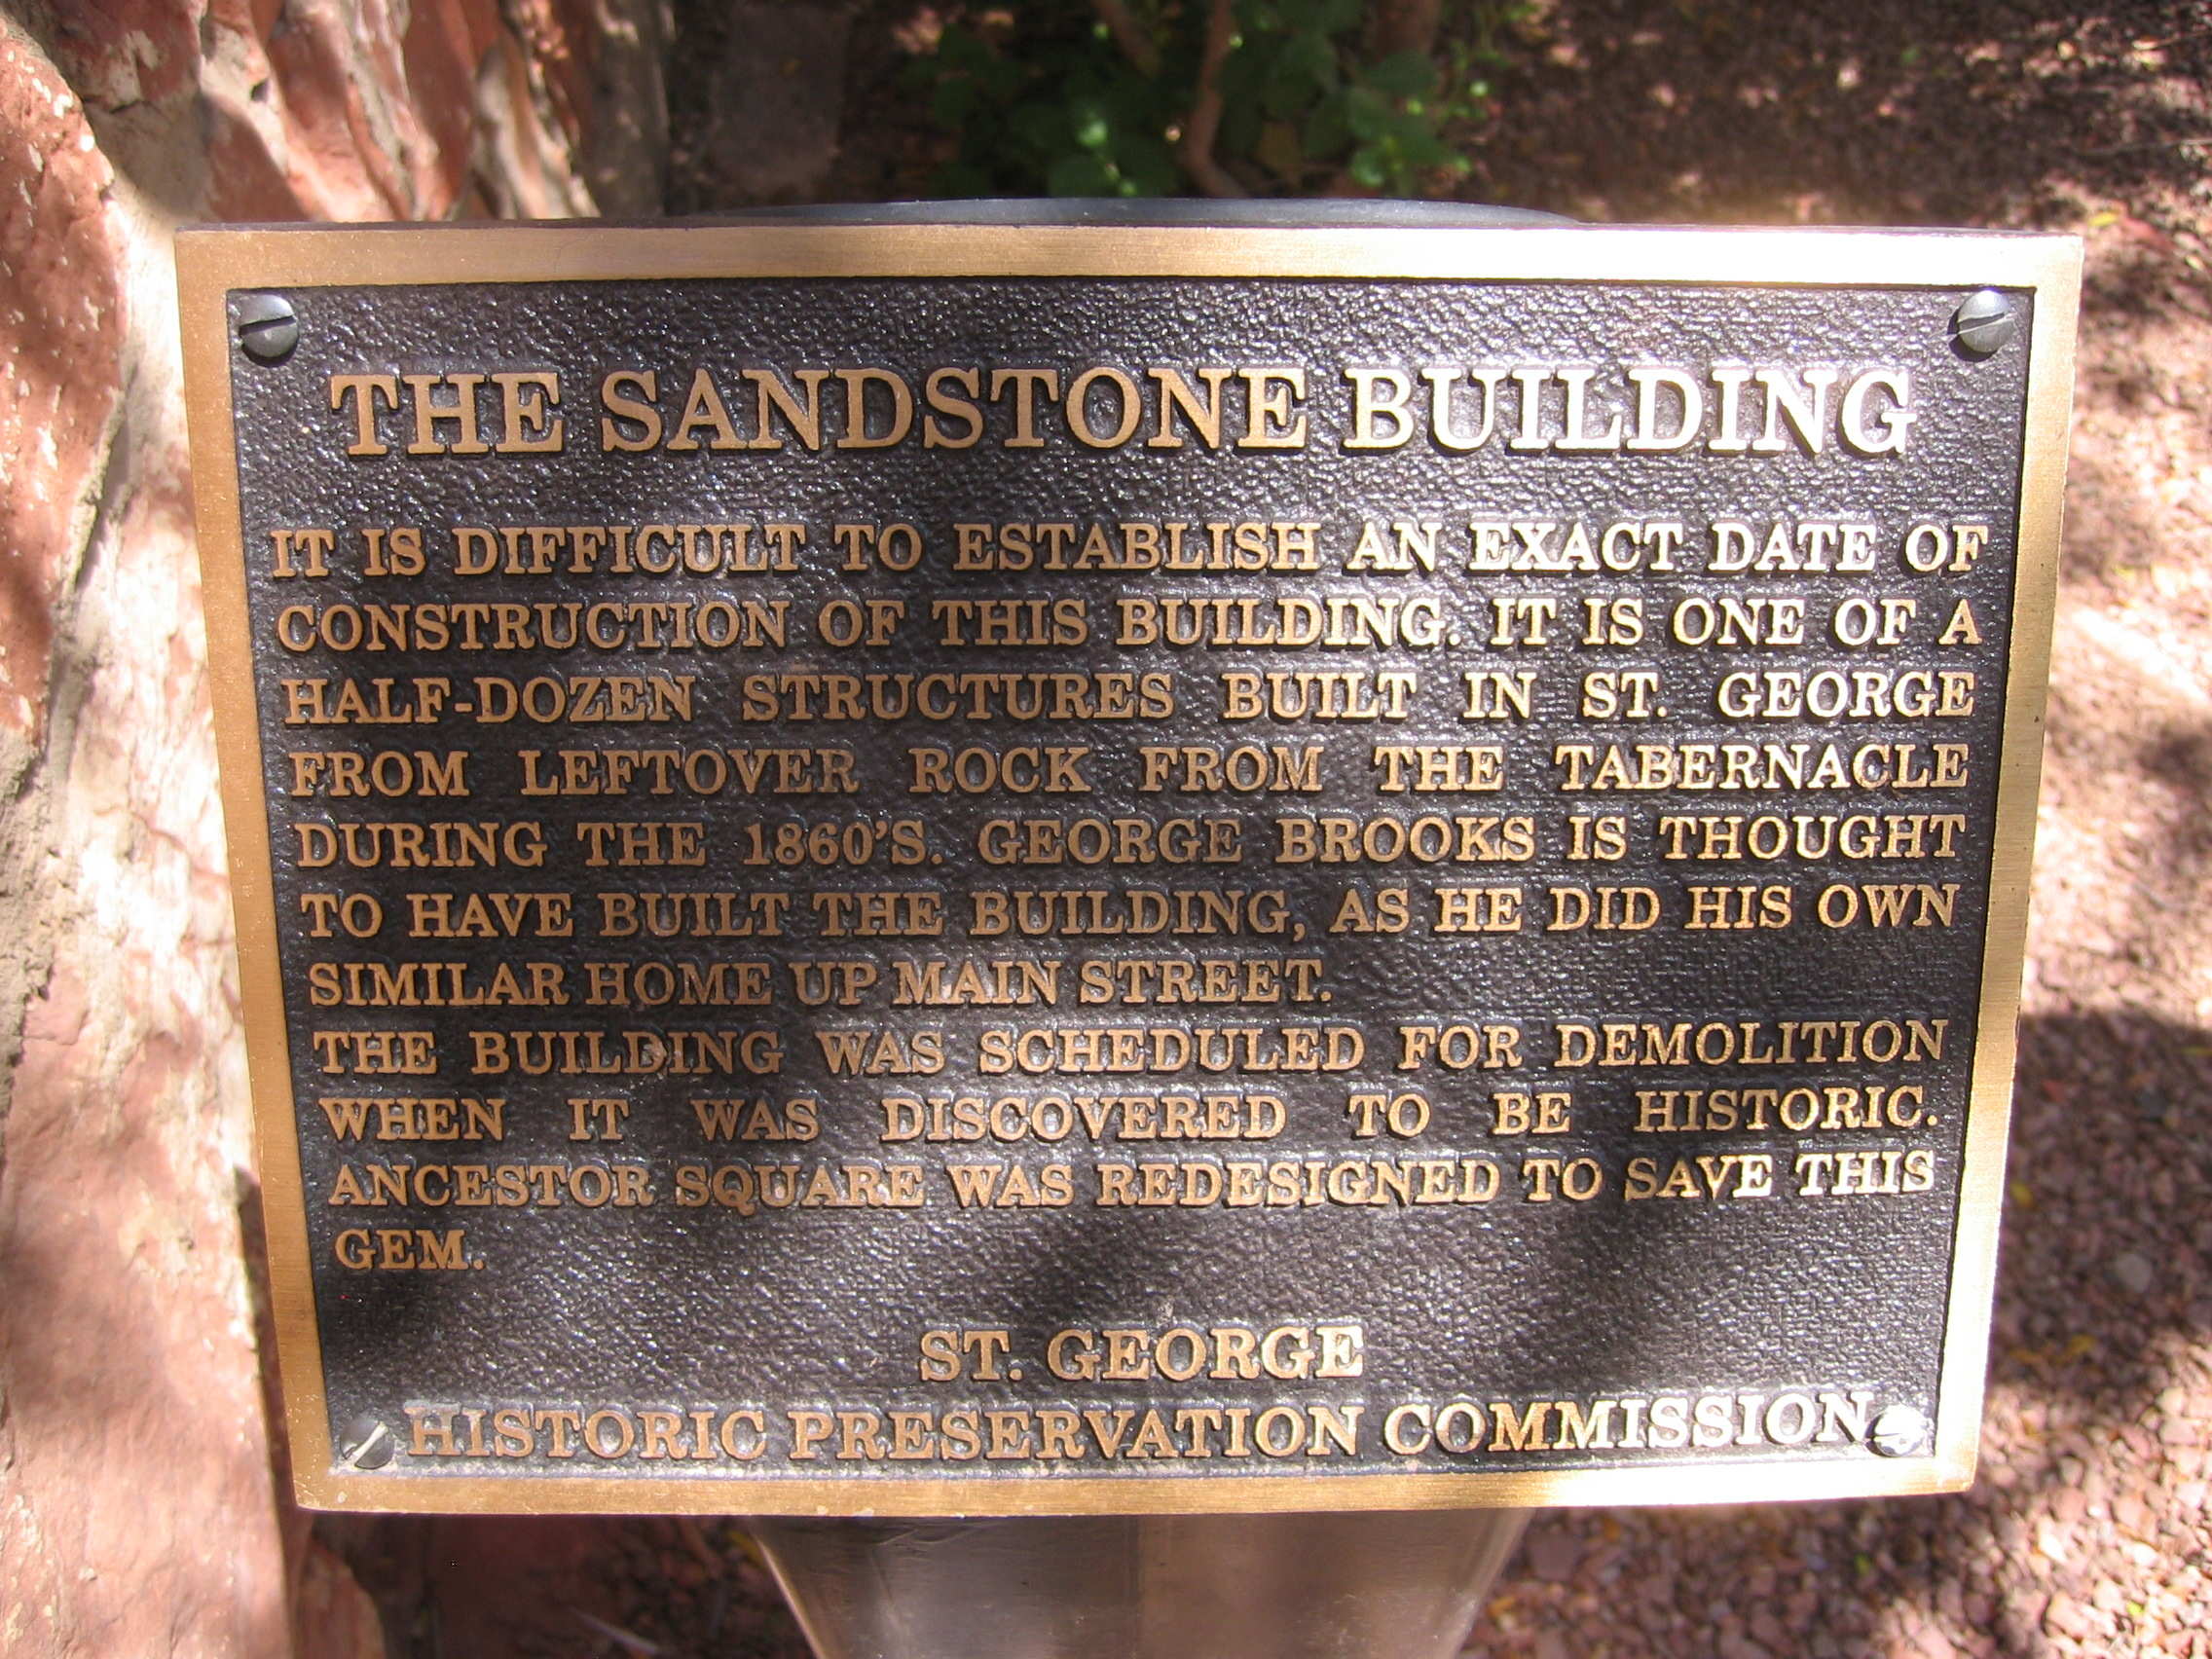 WCHS-00201 Plaque at the Sandstone Building